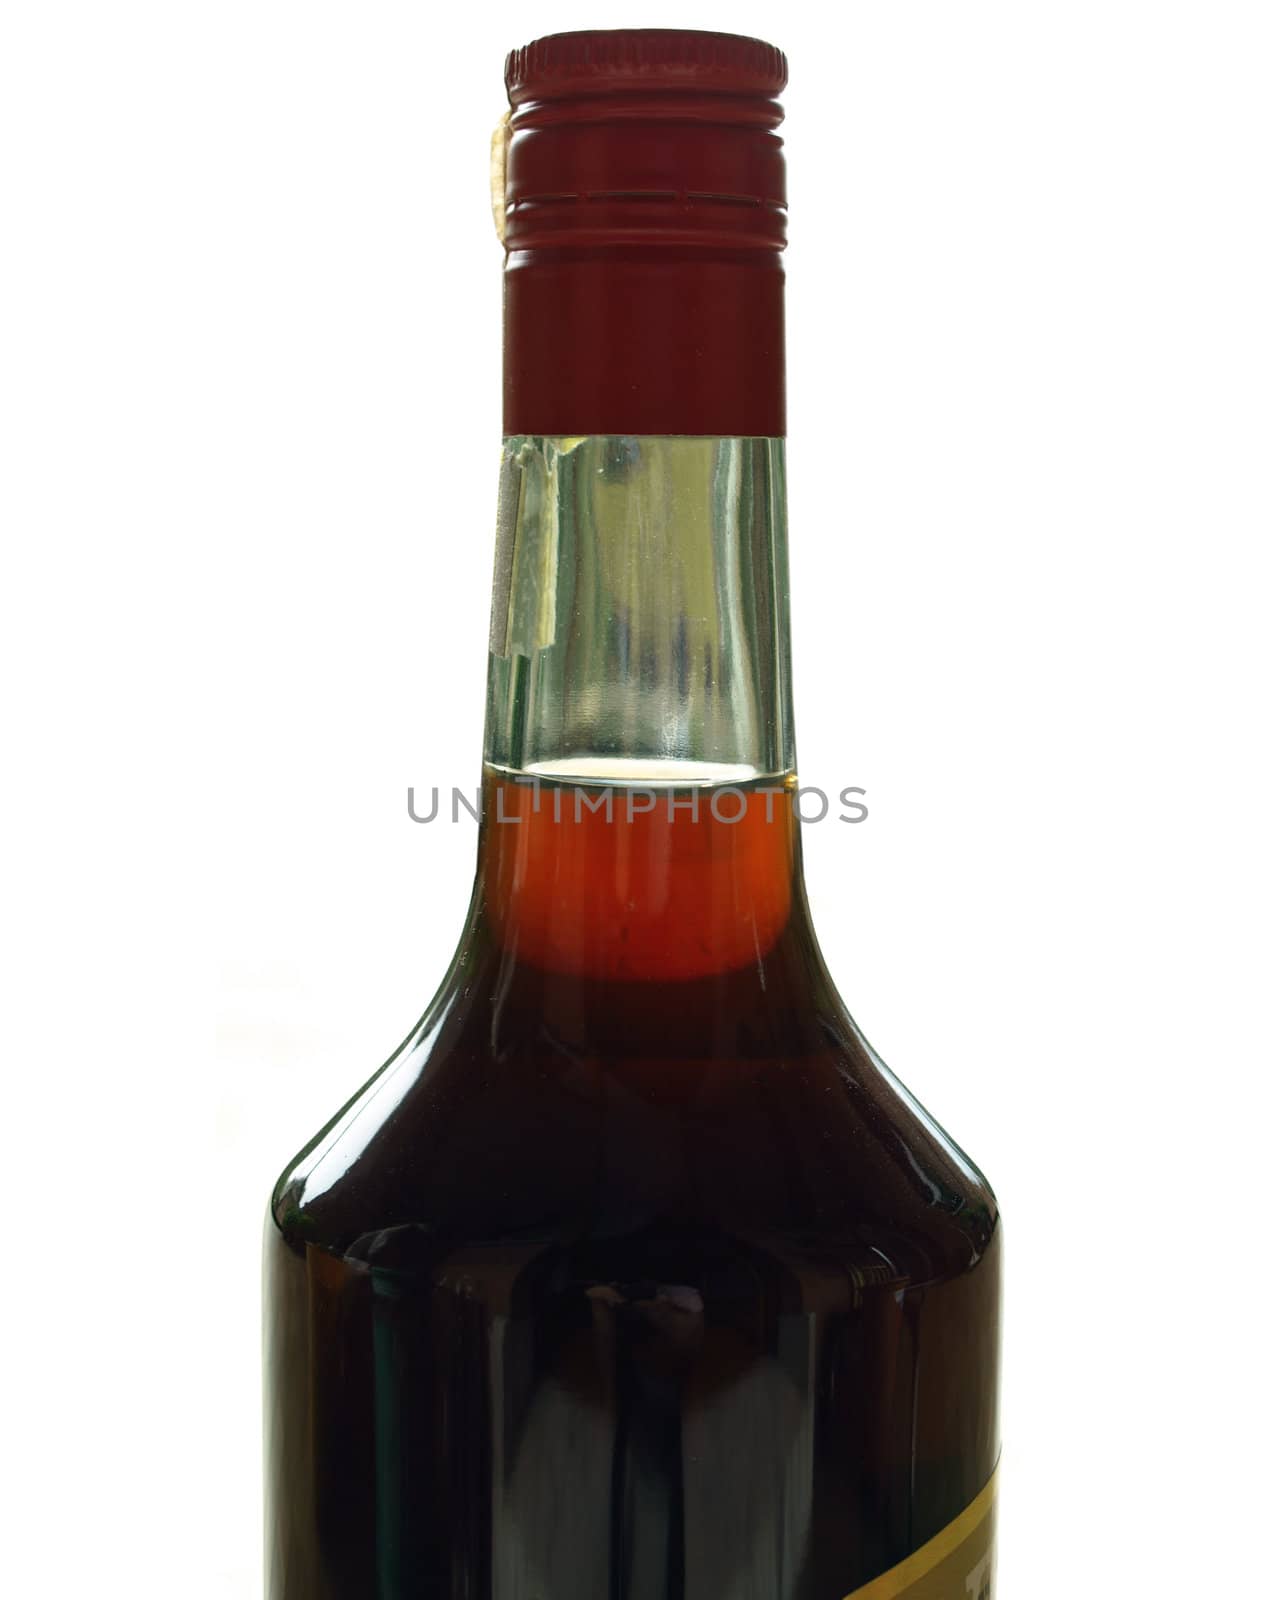 Bottle by claudiodivizia